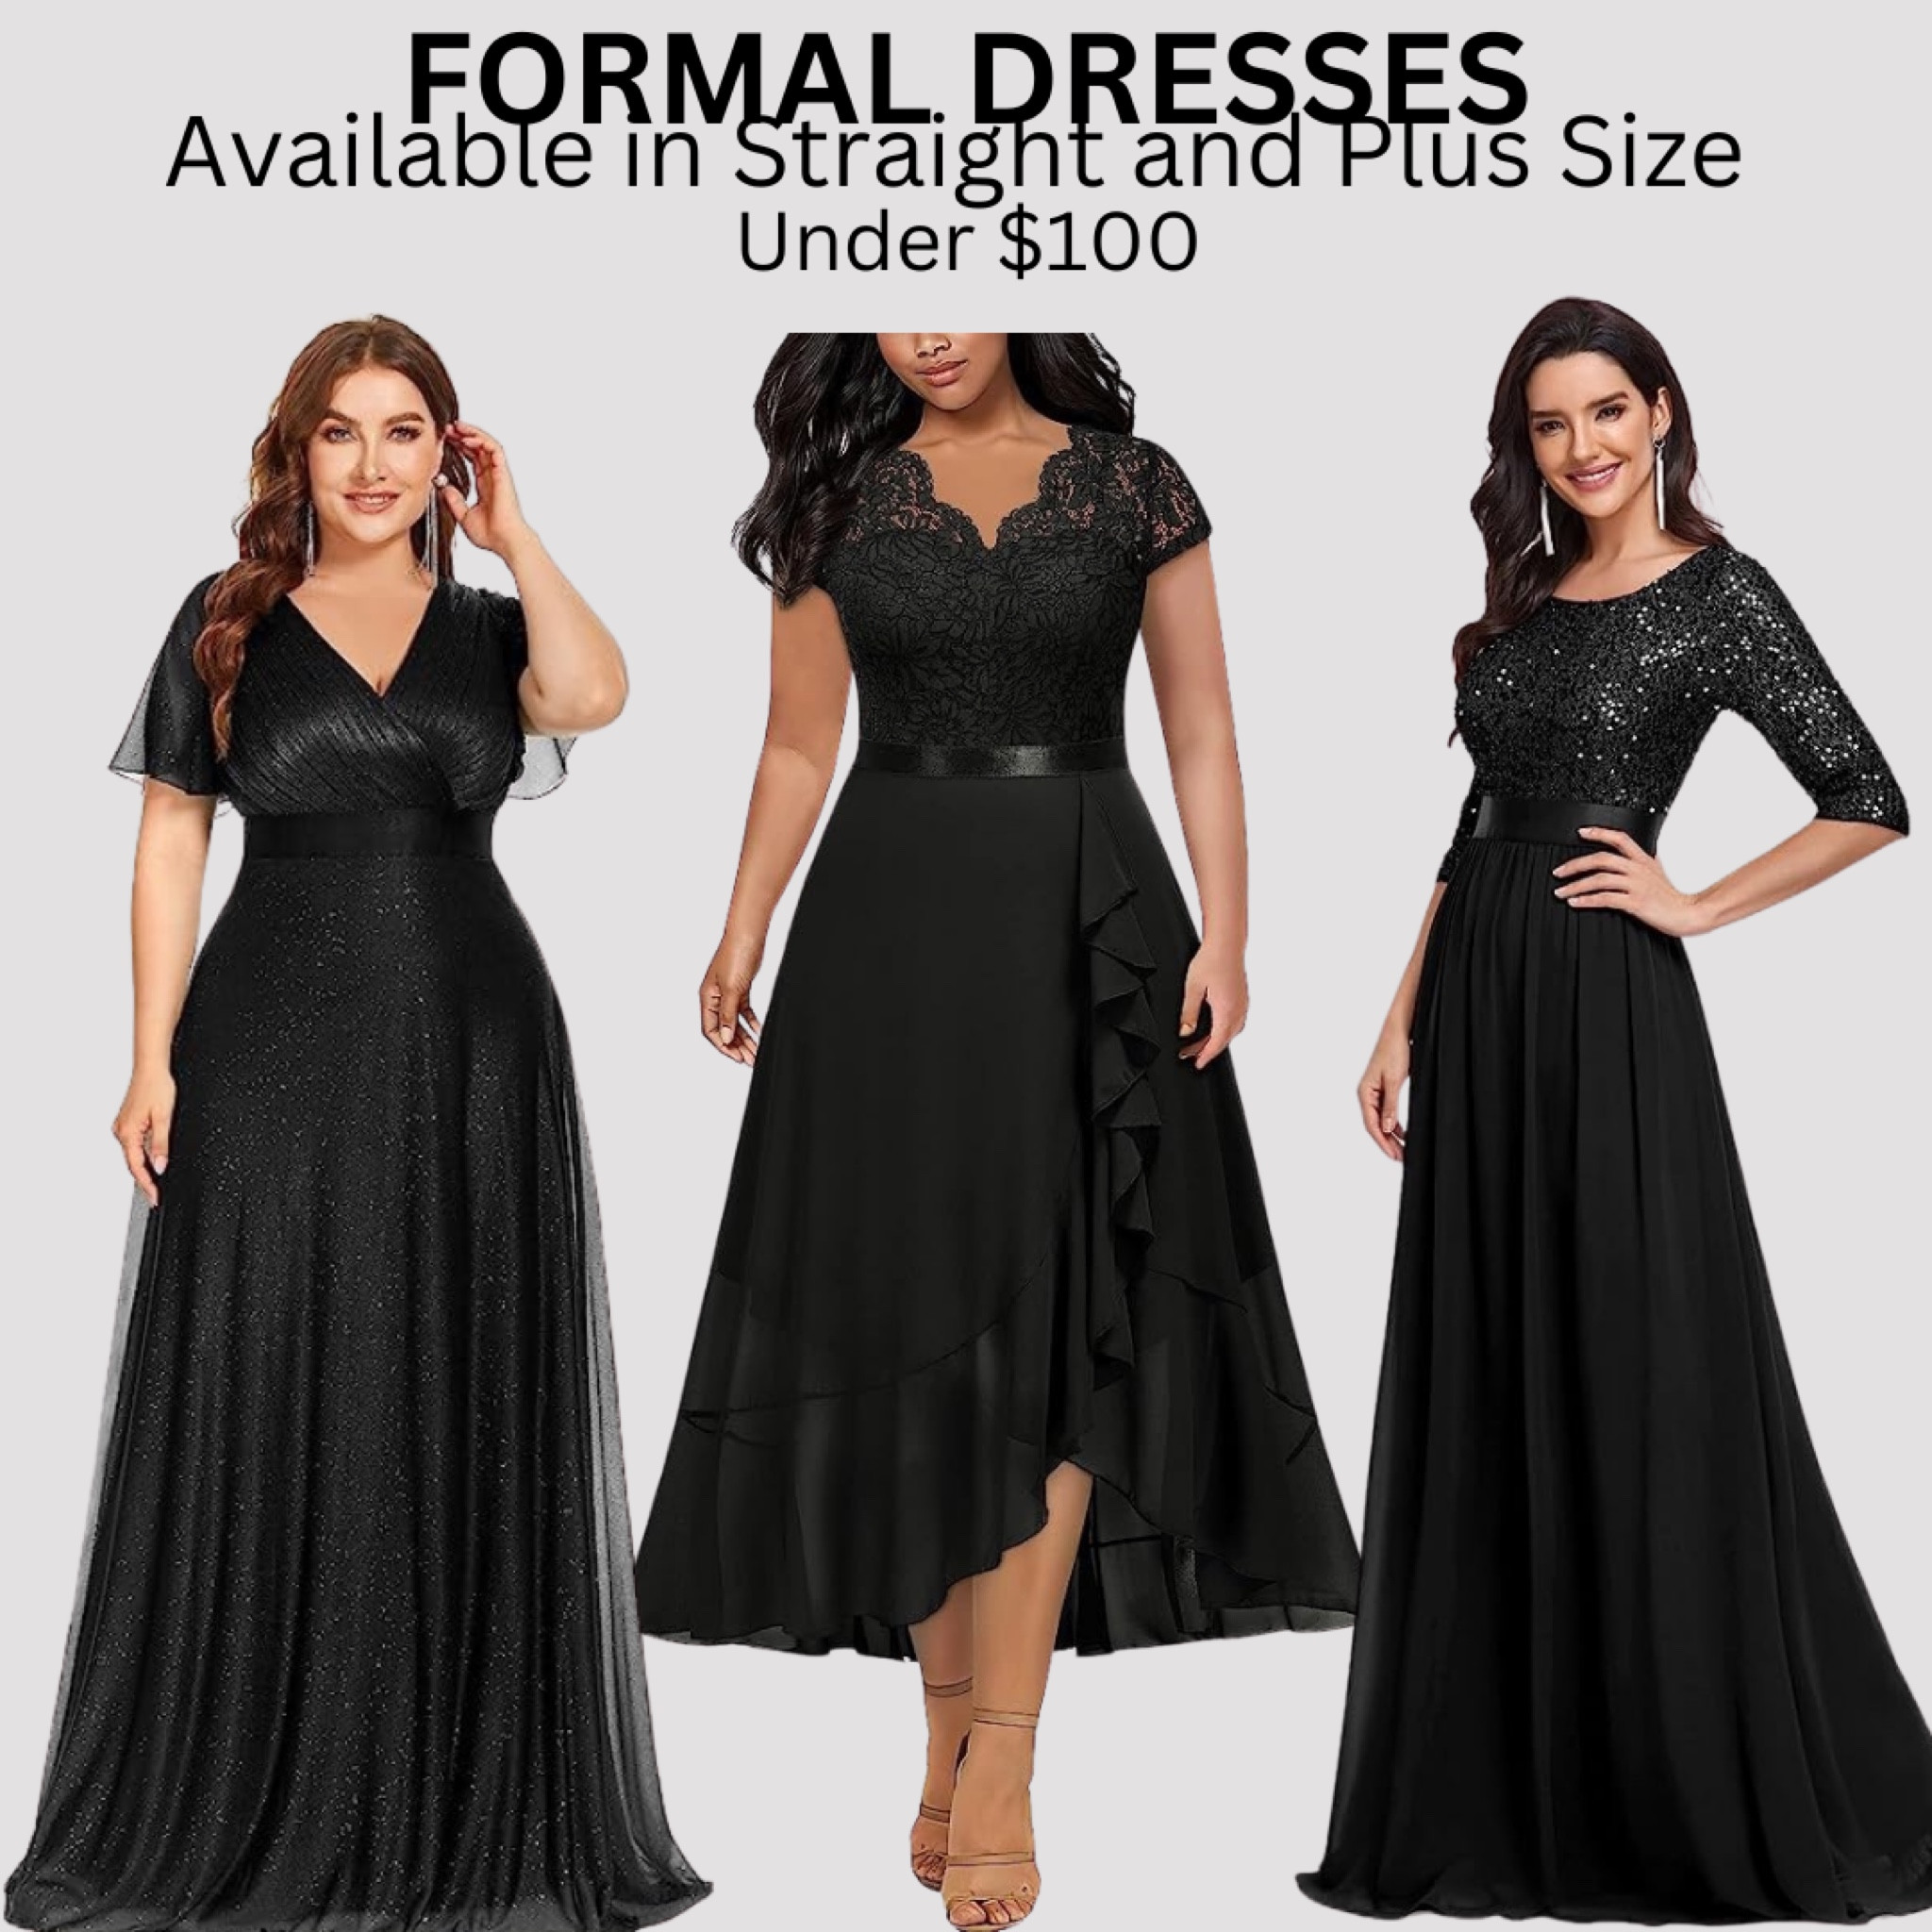 formal dresses for plus size women